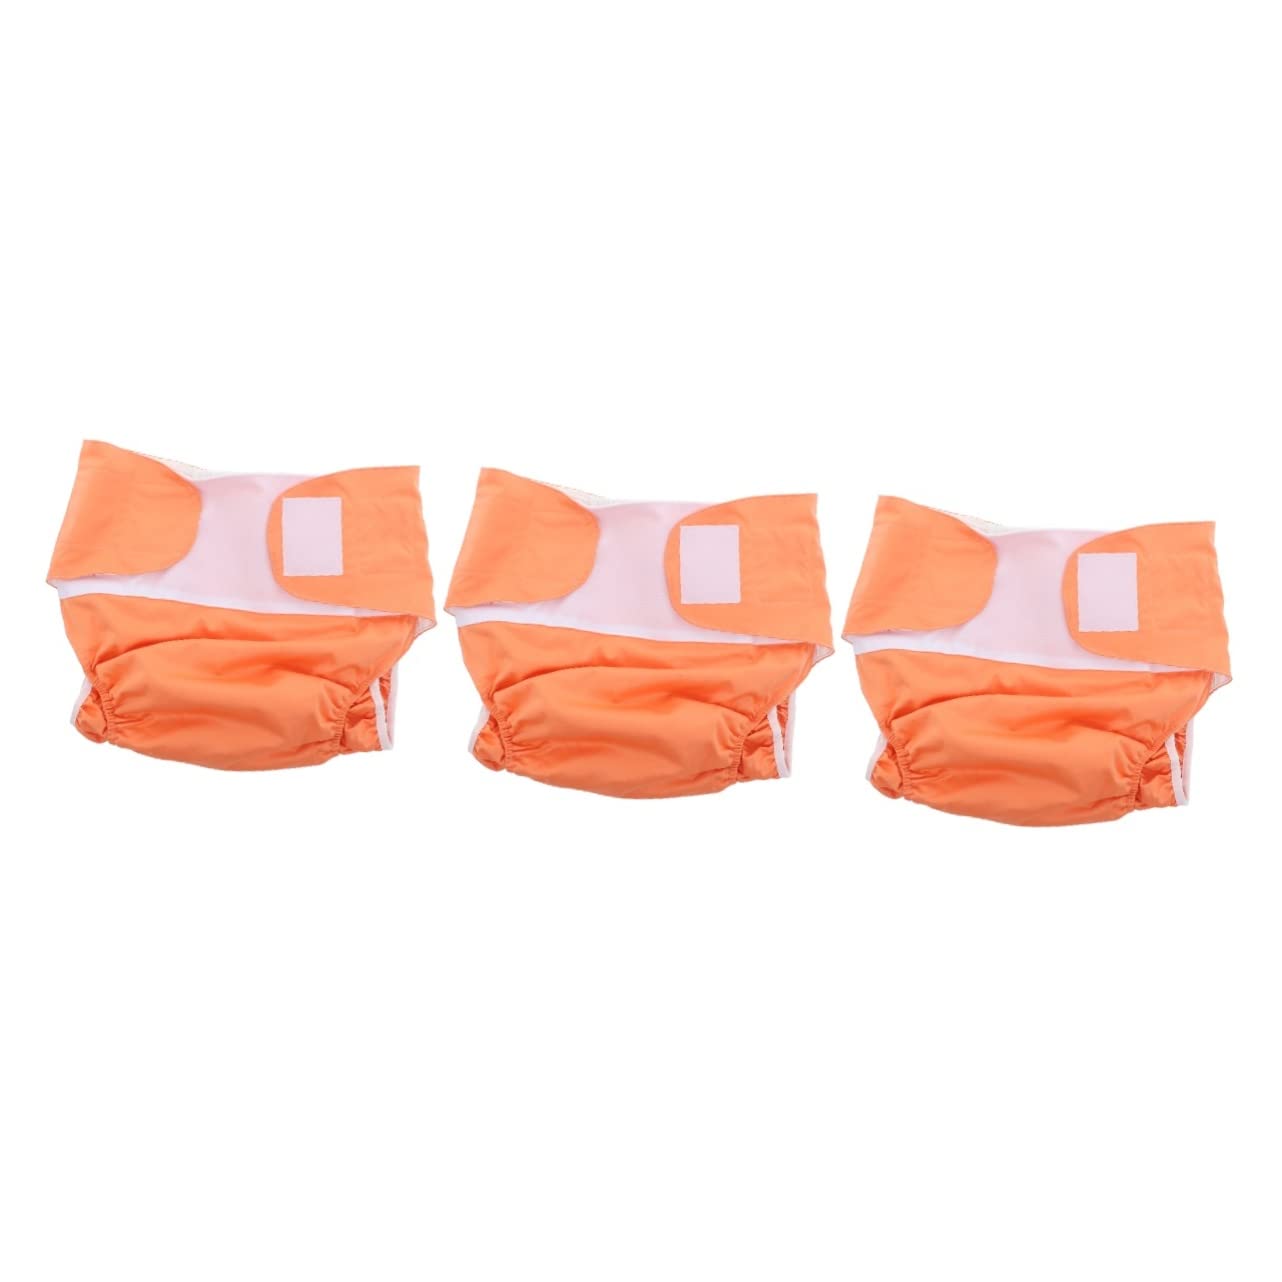 DOITOOL Underware 3pcs Briefs Man Women Reusable Underwear Cover Orange  Surgery Adjustable Elastic Wraps Prostate Cloth